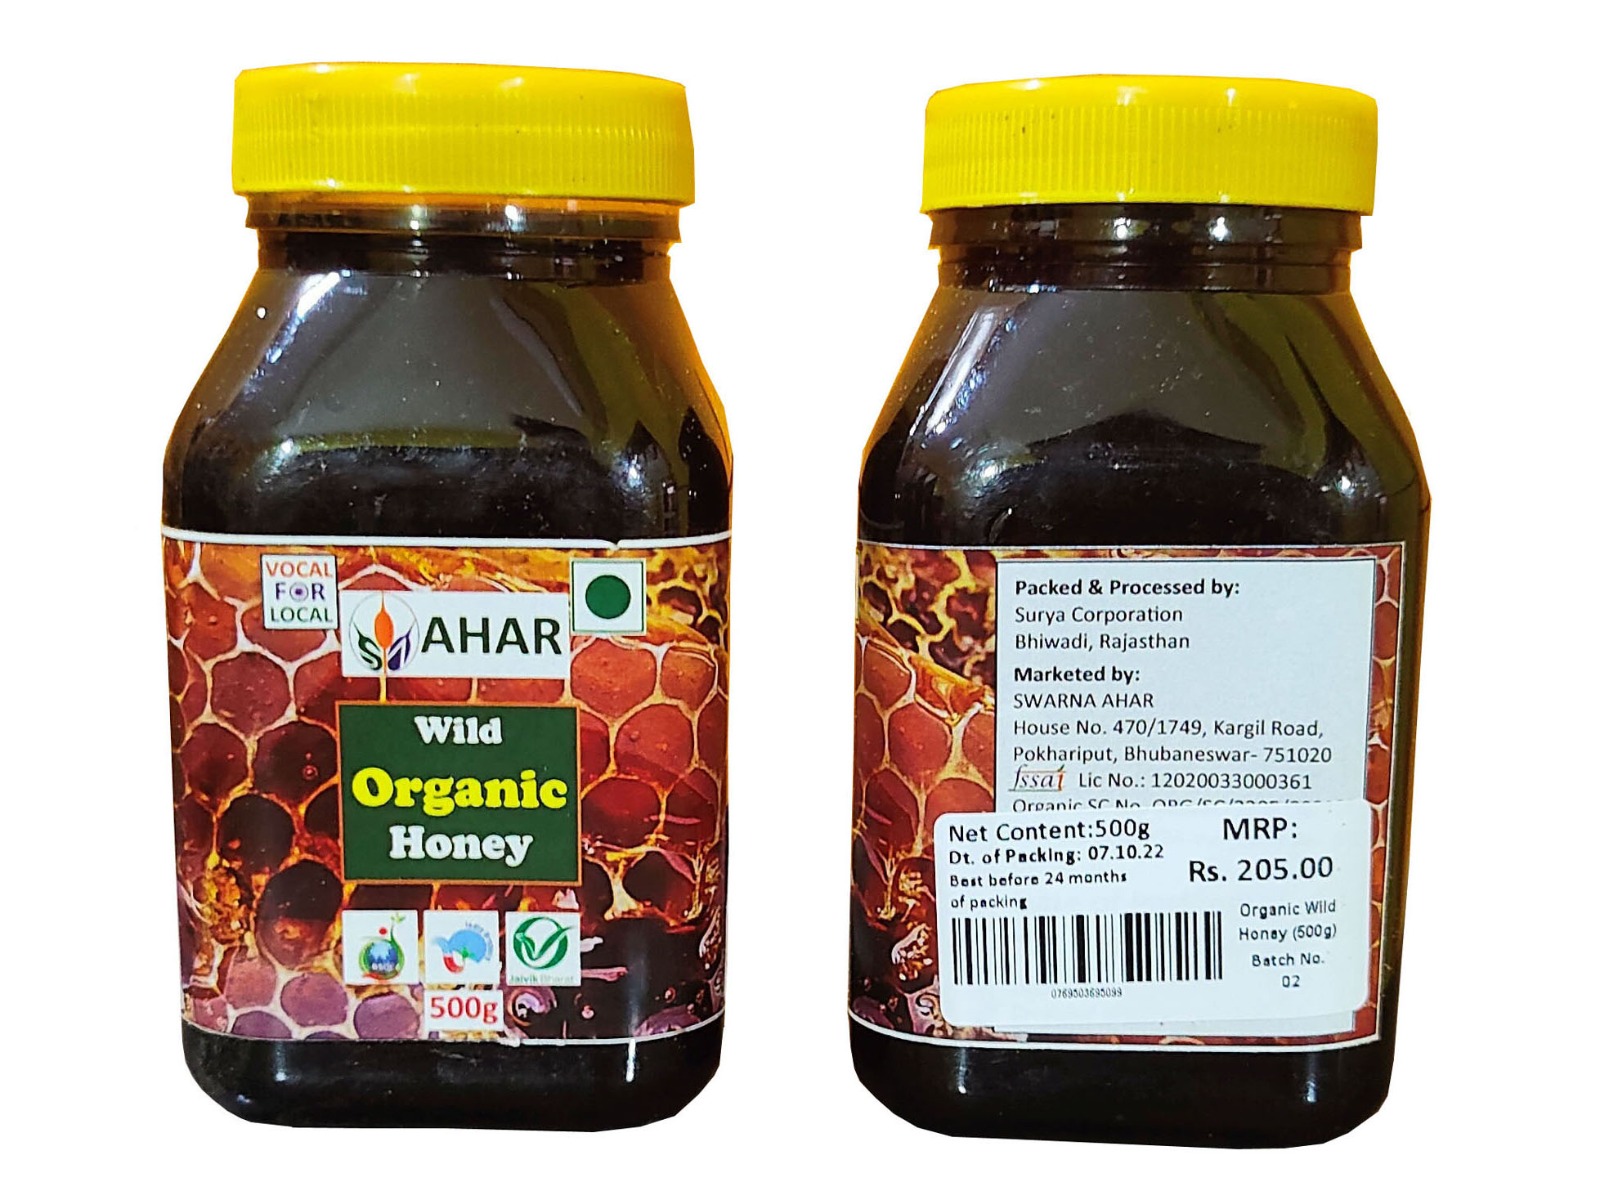 Ahar Organic Wild Honey